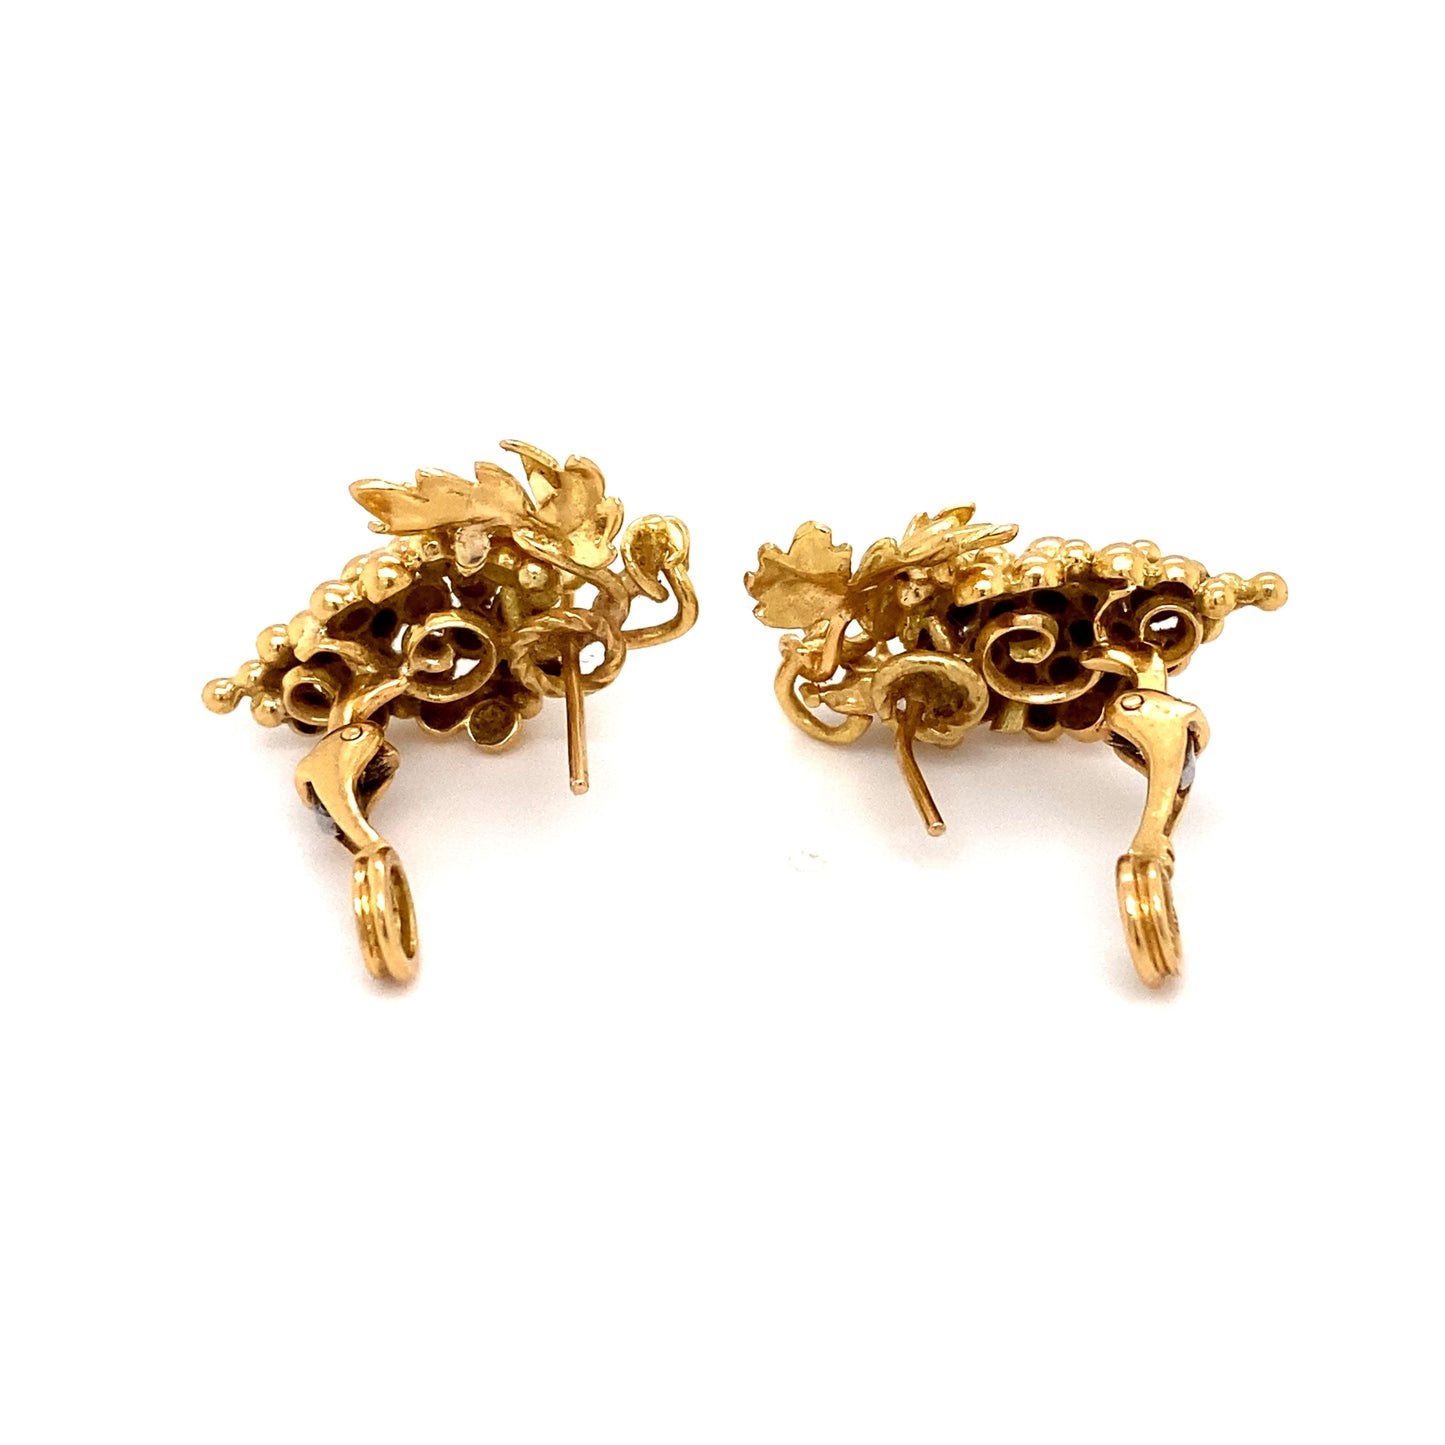 1950s Retro French Clip Grape Earrings in 18K Gold